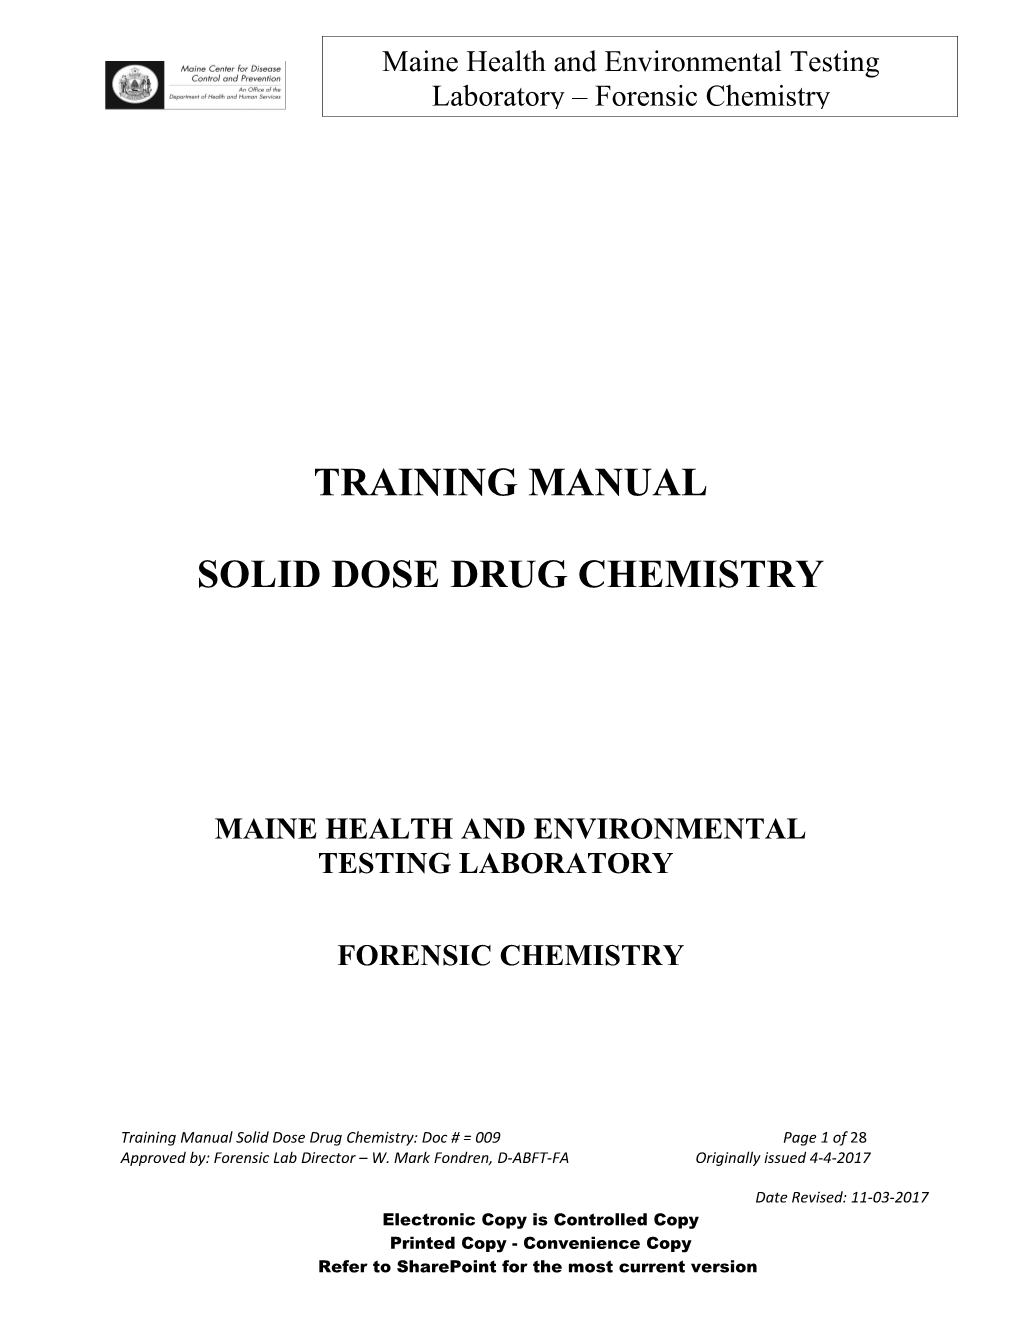 Training Manual - SDD